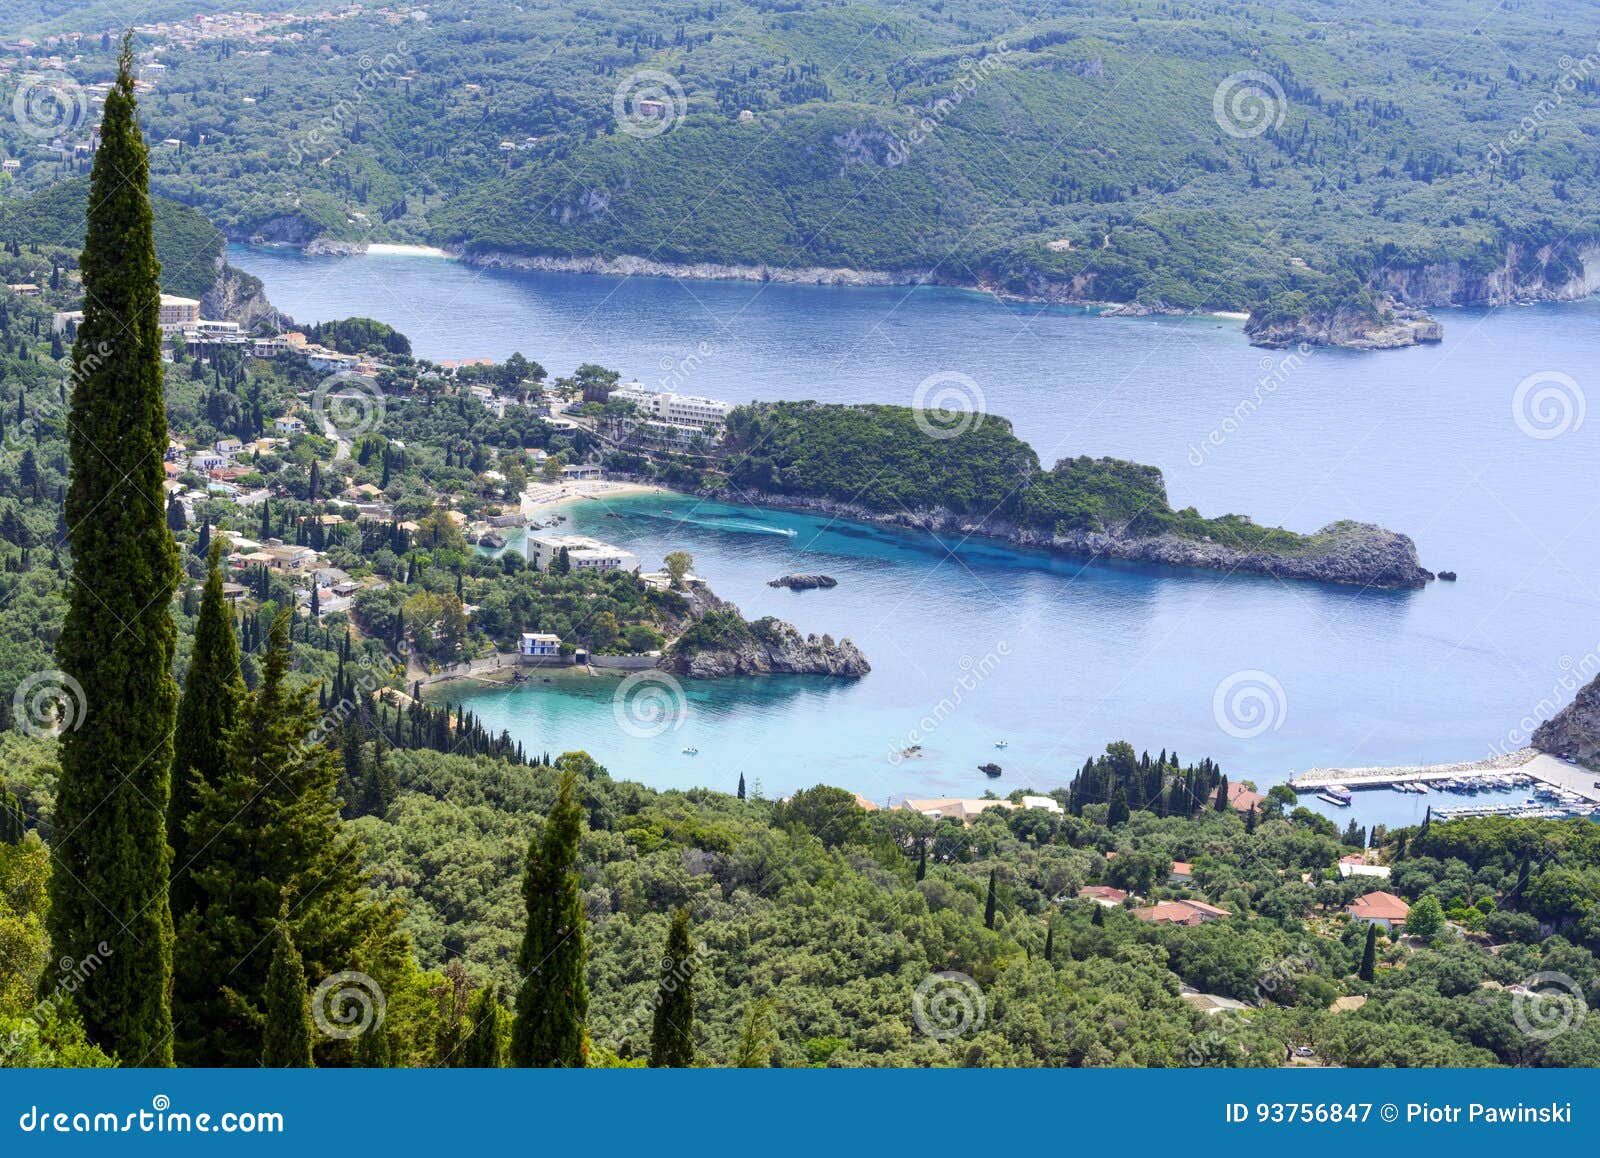 Paleokastritsa coast stock image. Image of scenic, coastline - 93756847